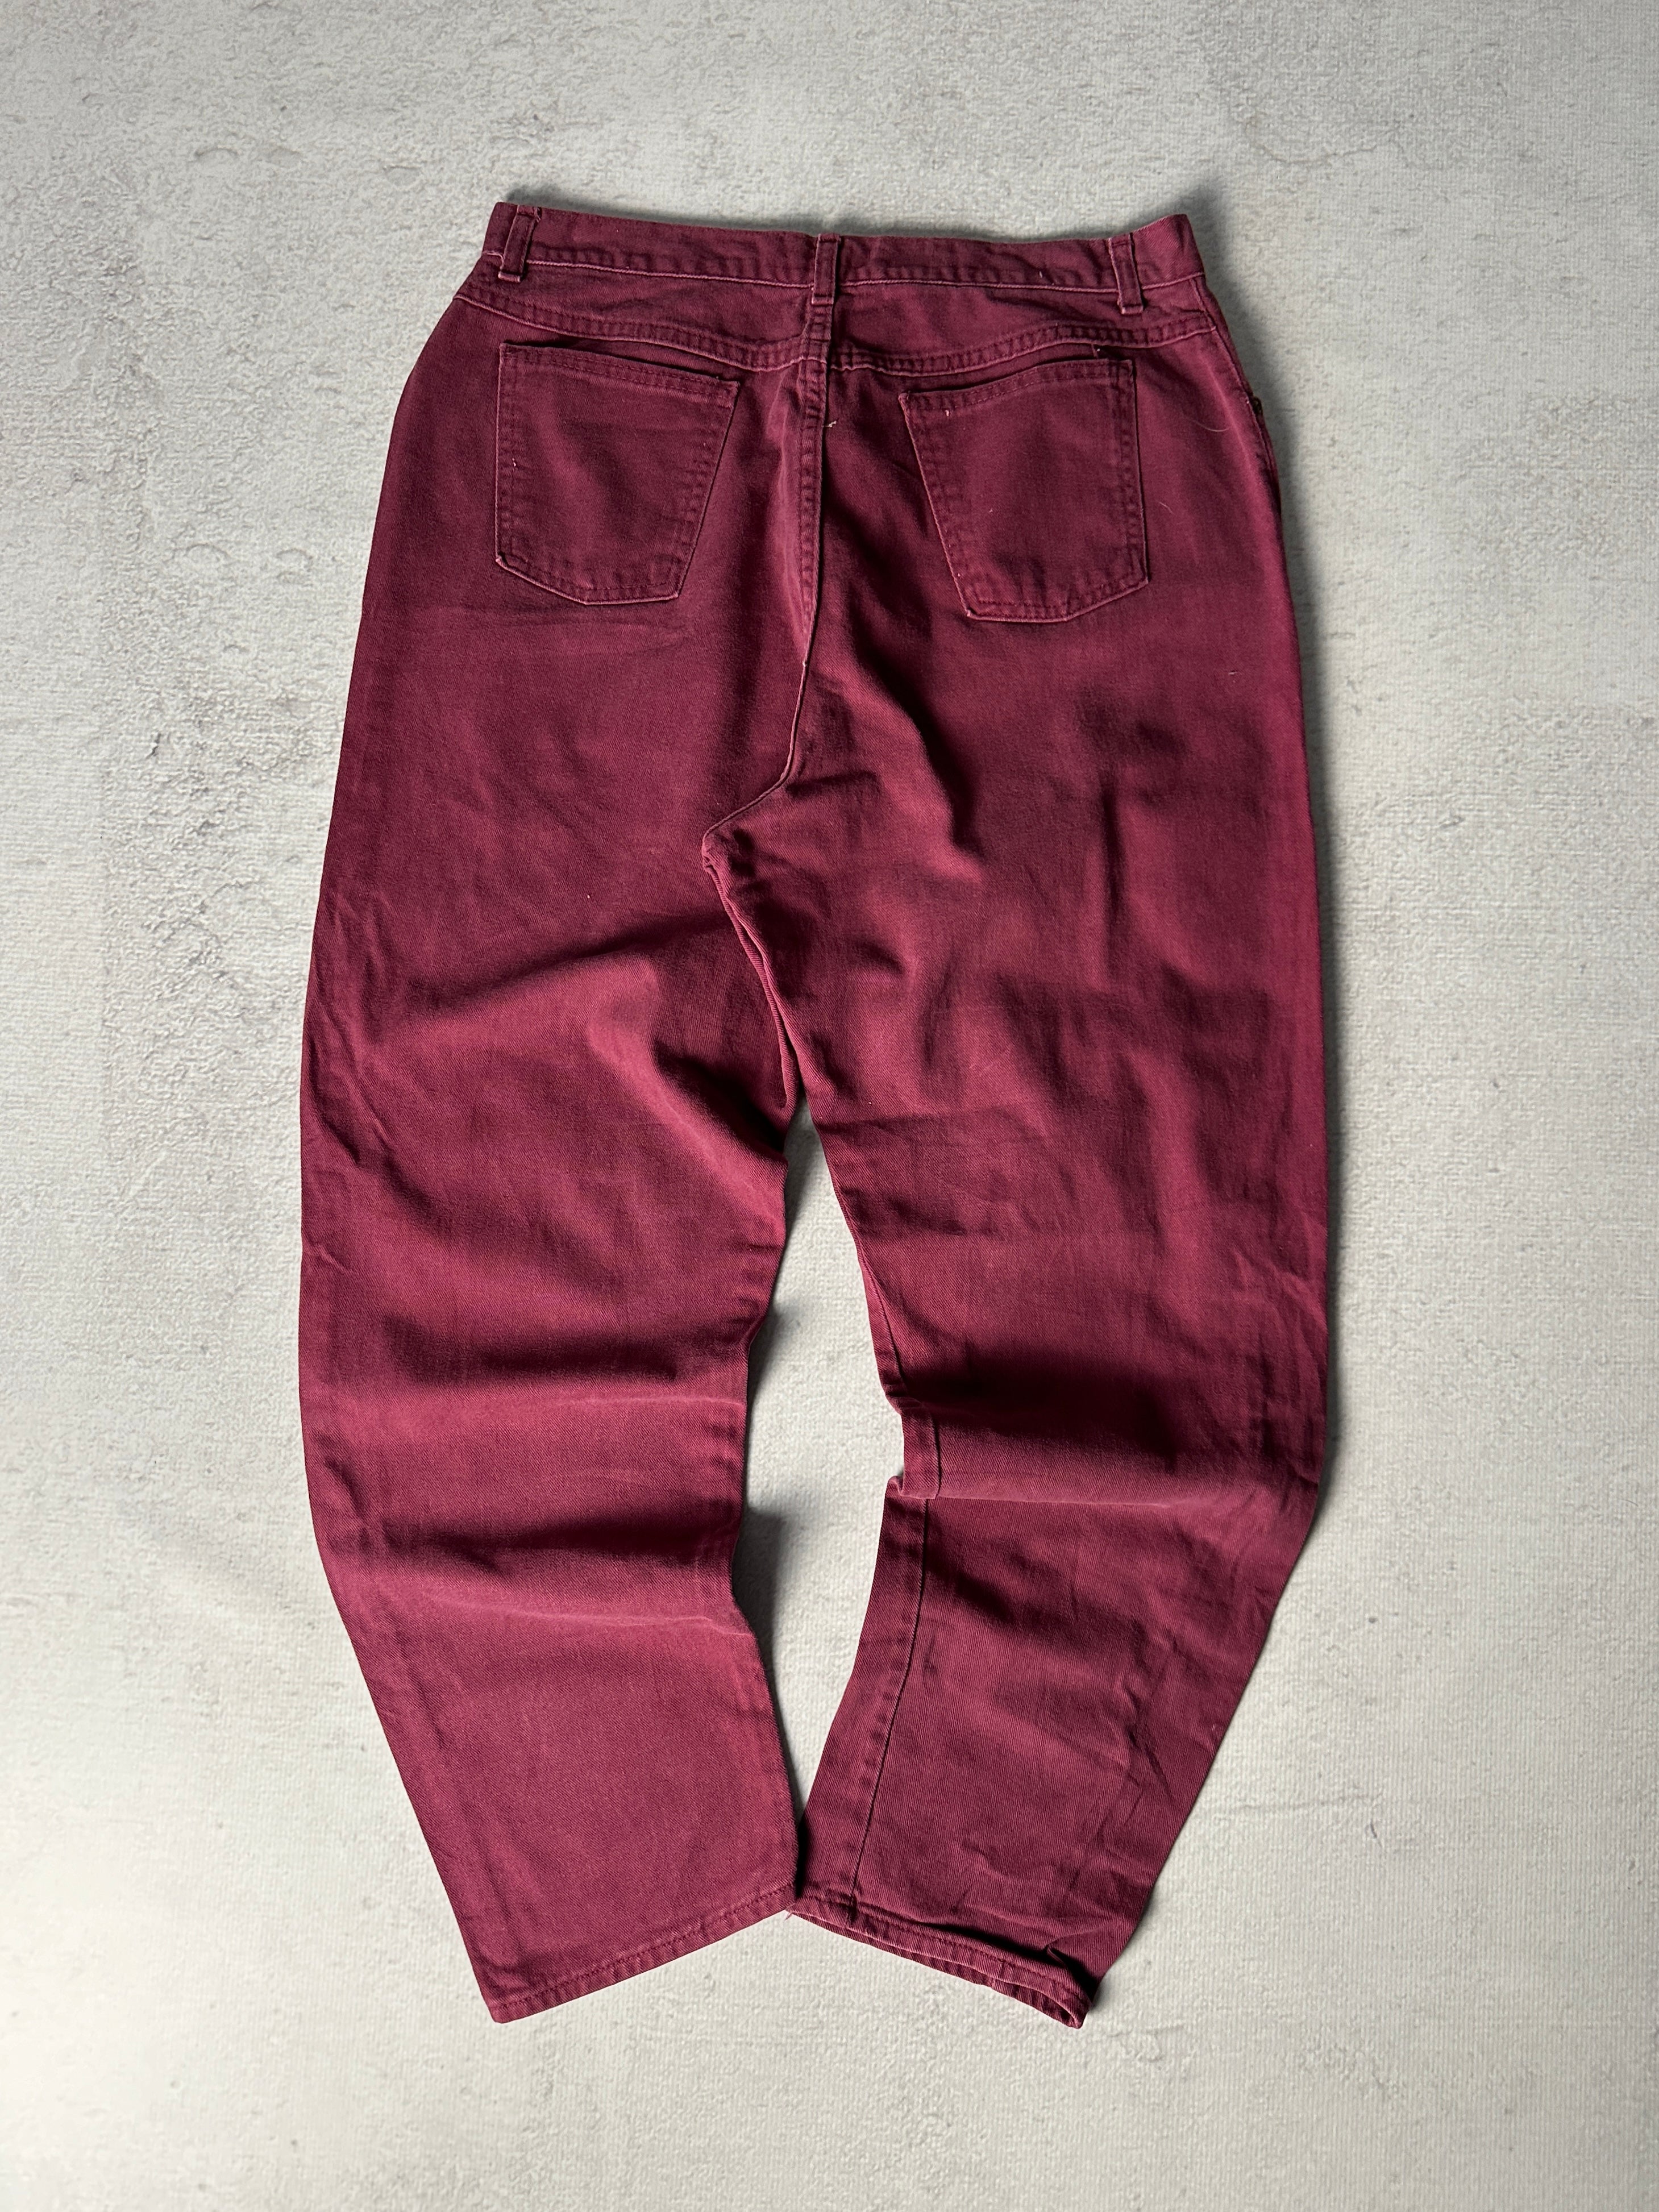 Vintage Jeans - Women's 35W30L